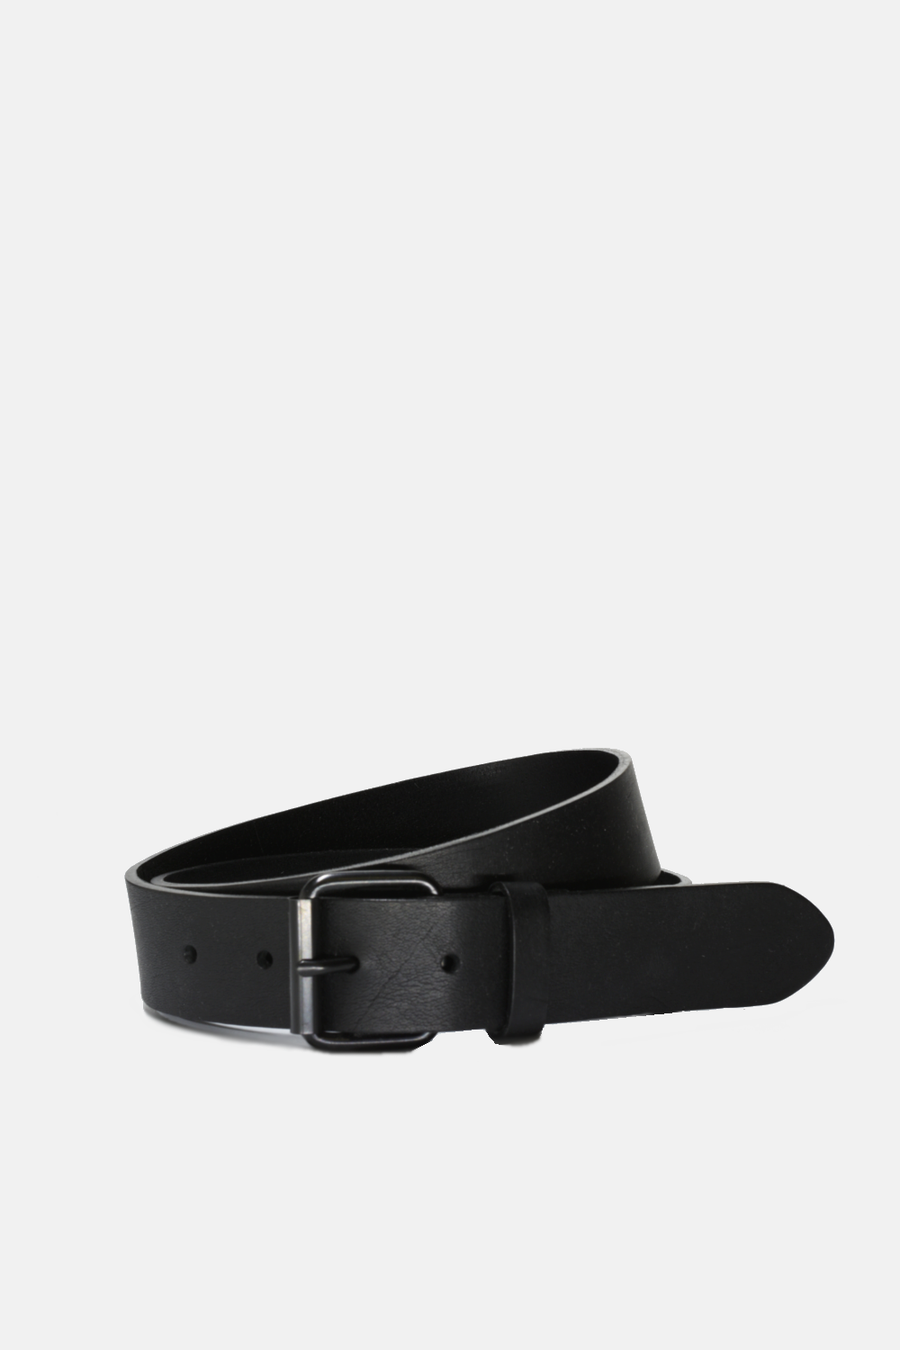 Black Leather on Black Buckle Belt: Small